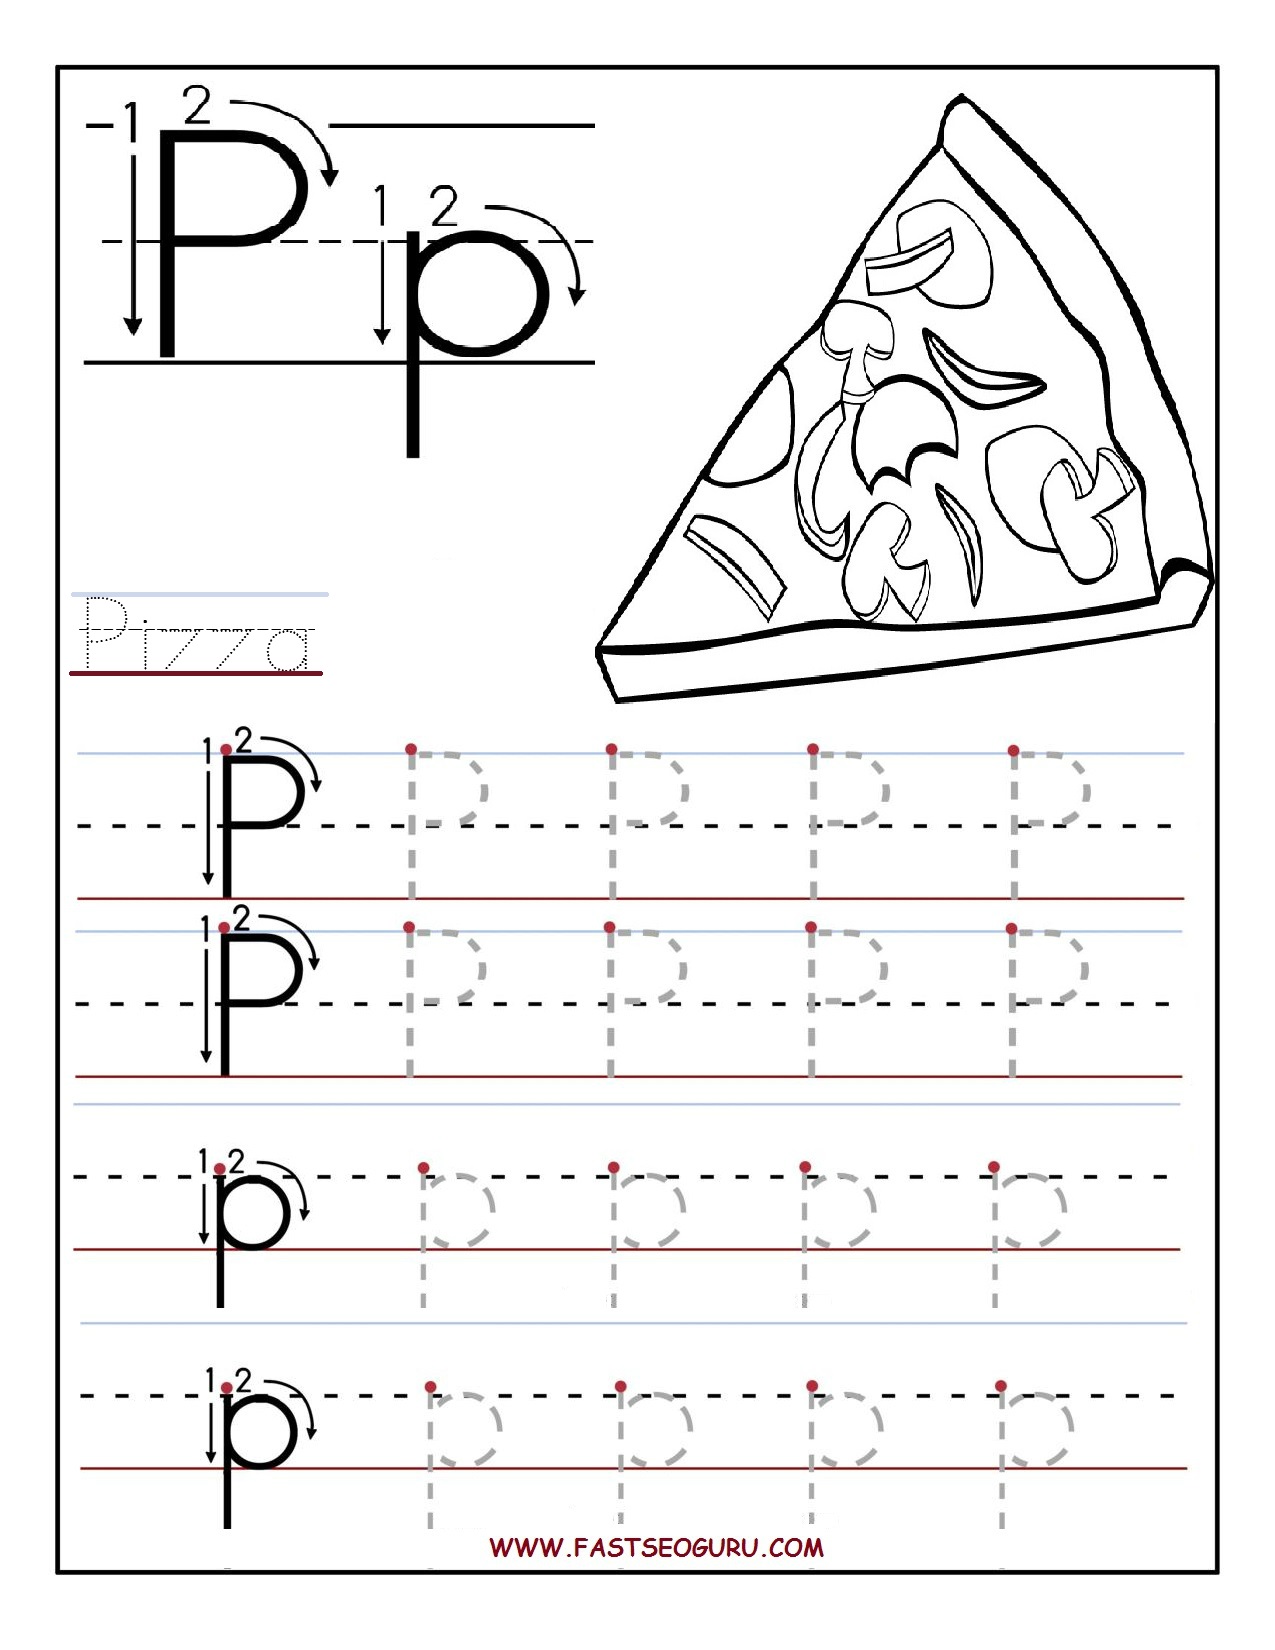 27-free-printable-alphabet-tracing-sheets-for-preschoolers-image-school-info